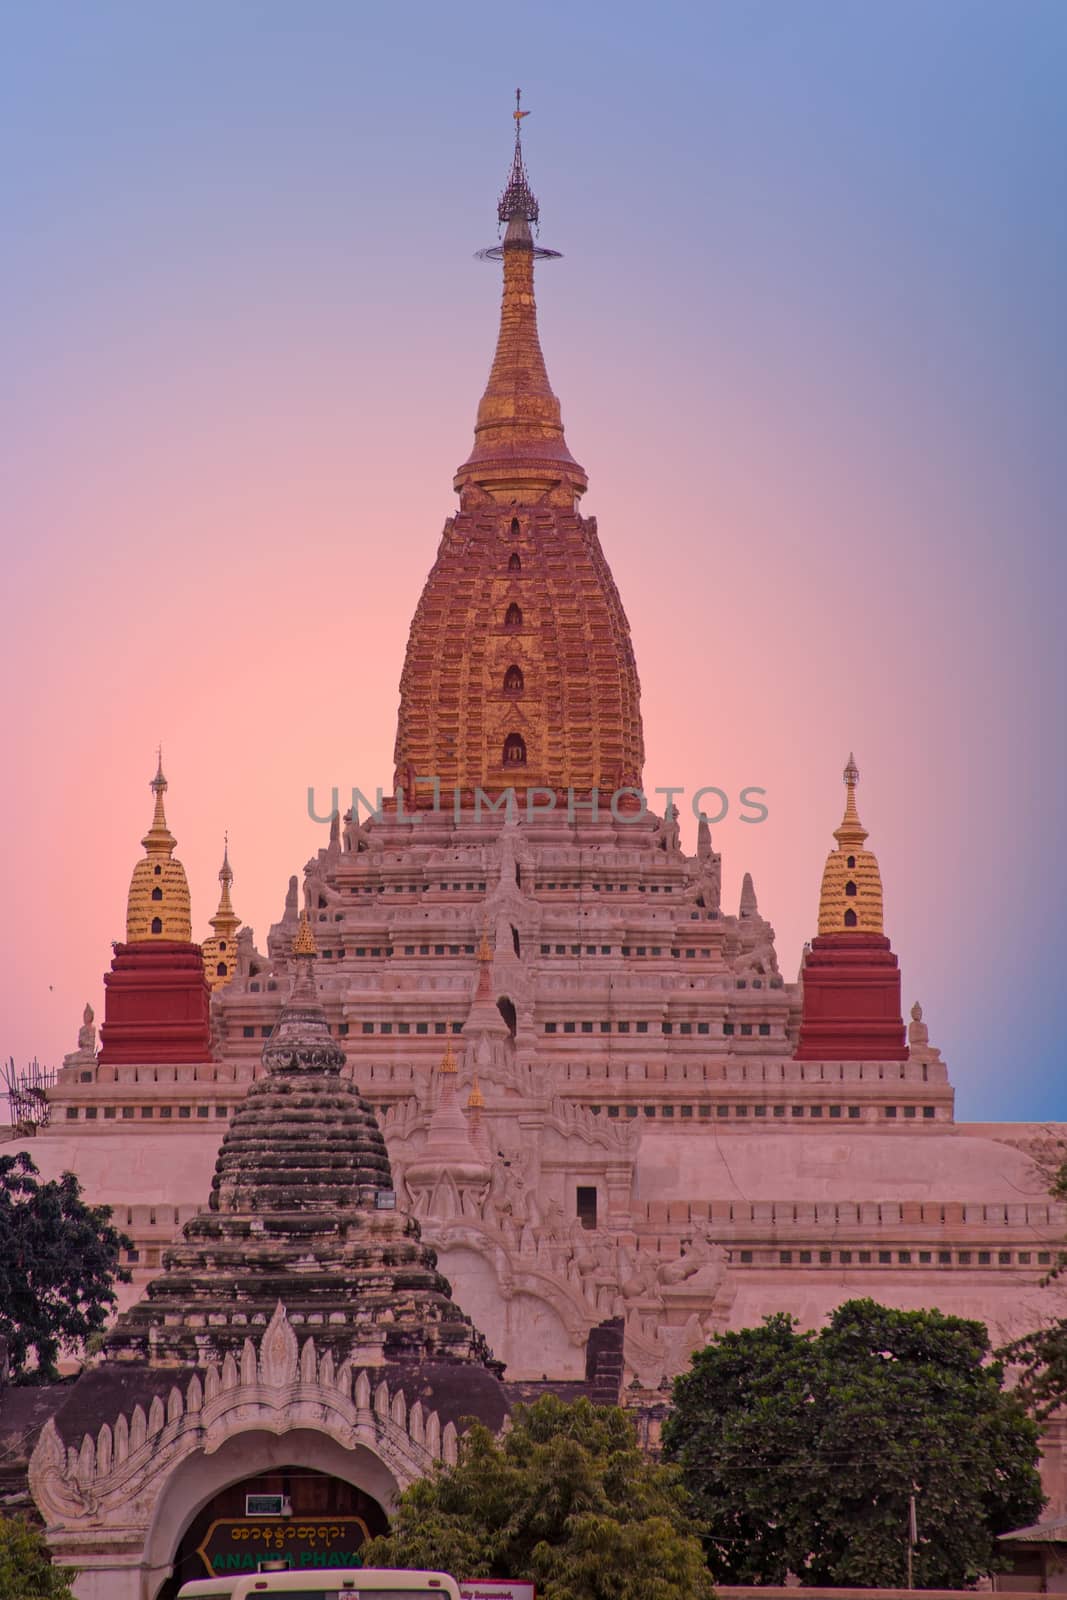 Ananda temple in Bagan, Myanmar at sunset by devy